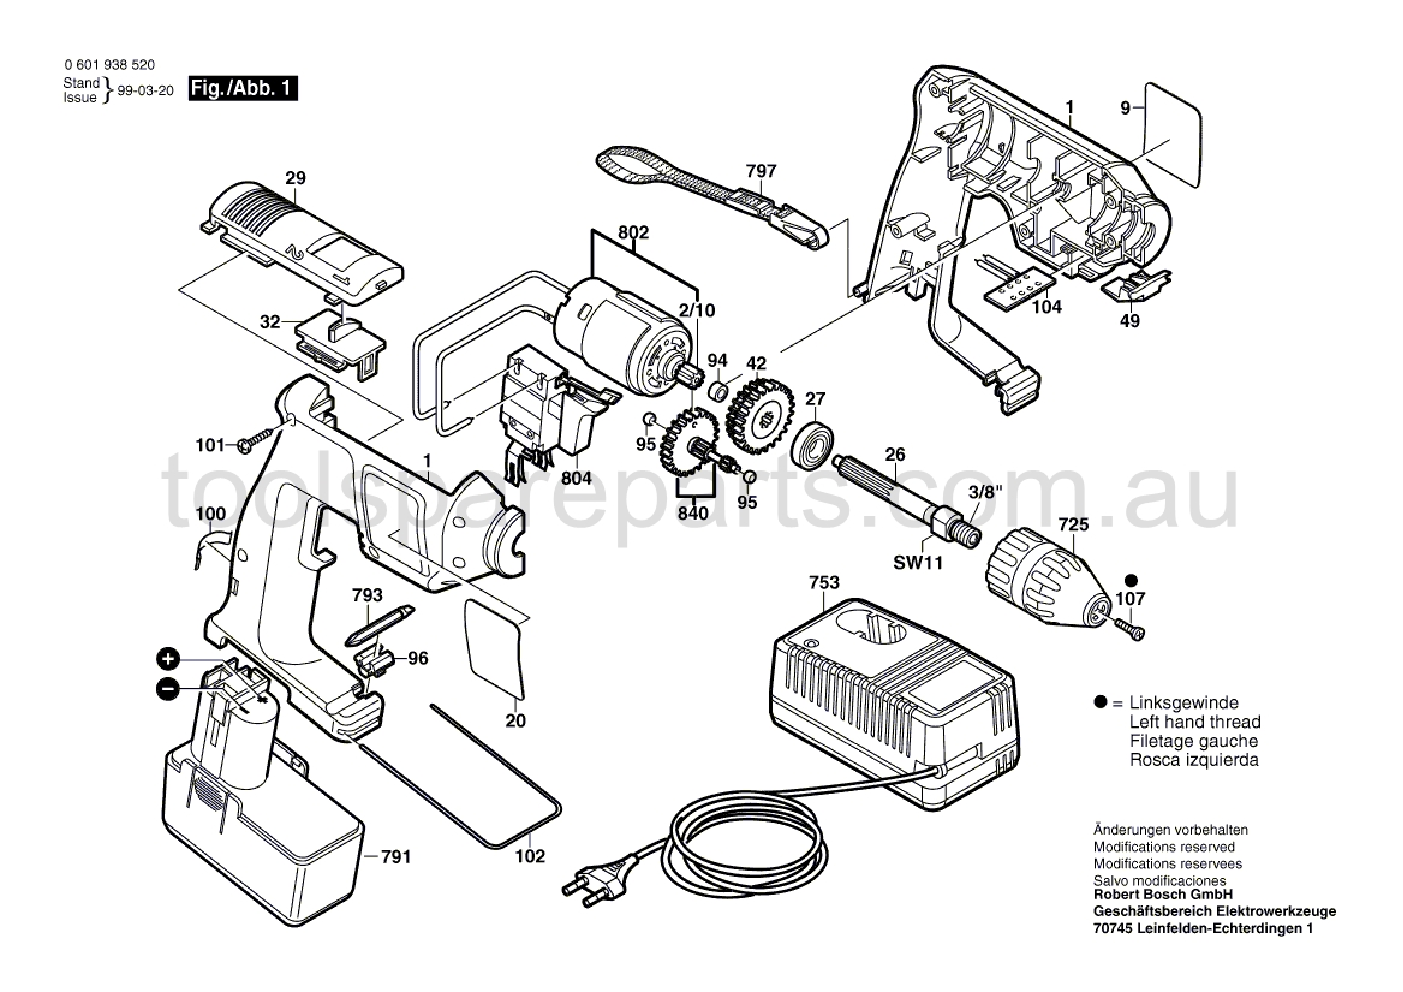 Bosch GBM 12 VES-2 06019385B6  Diagram 1